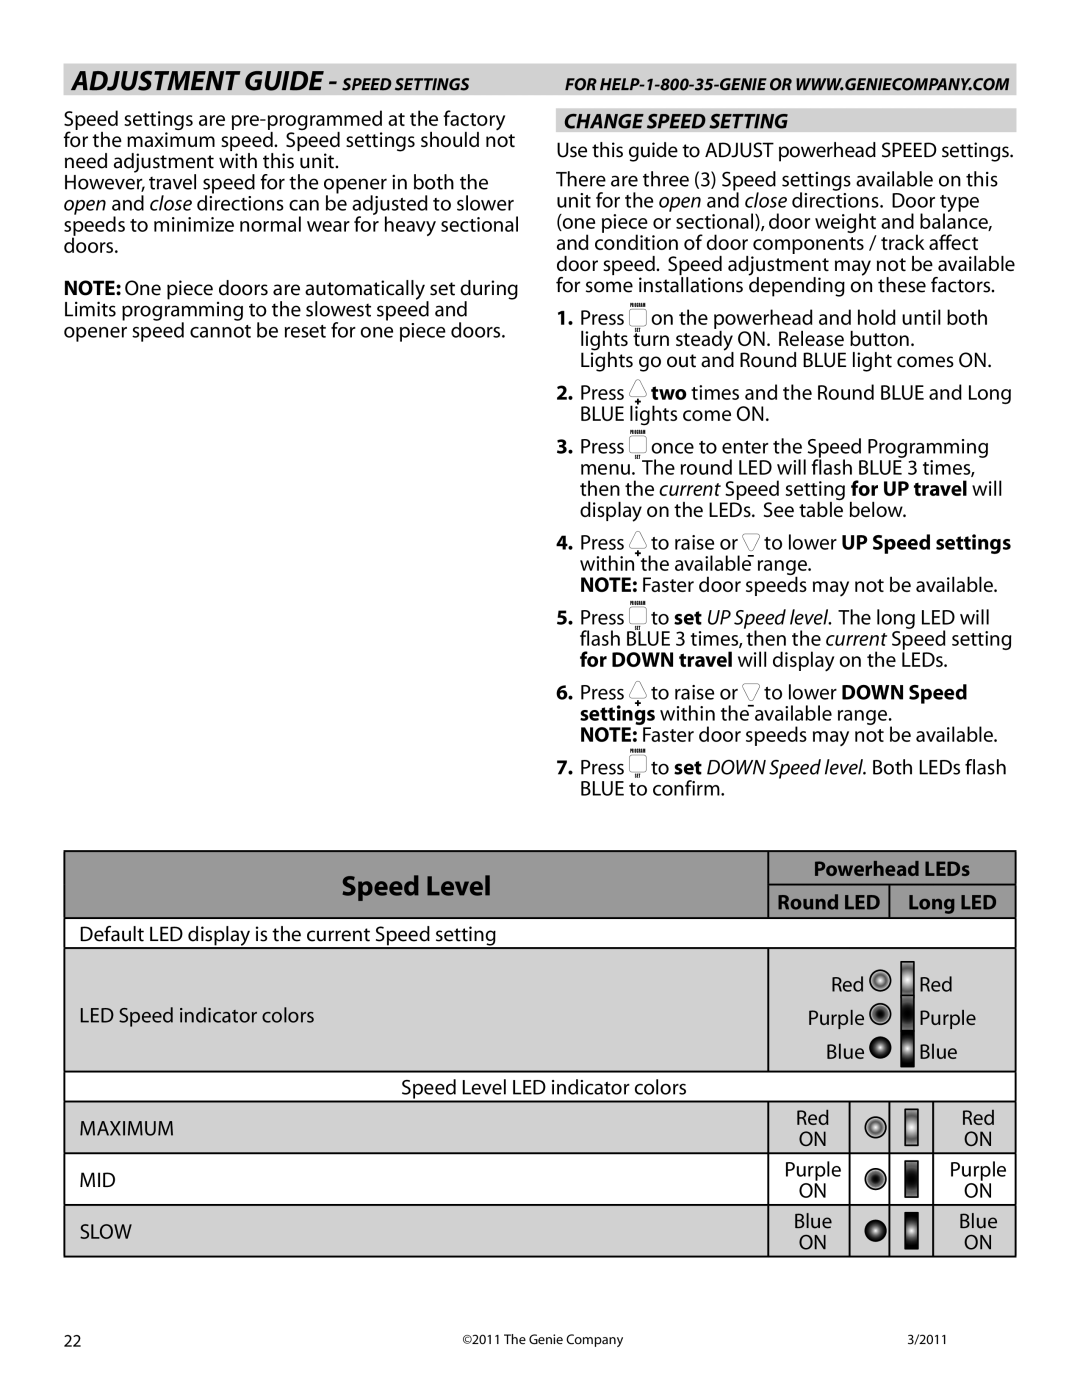 Genie 4042 manual Adjustment Guide - Speed Settings, Speed Level, Change Speed Setting, Powerhead LEDs Round LED Long LED 